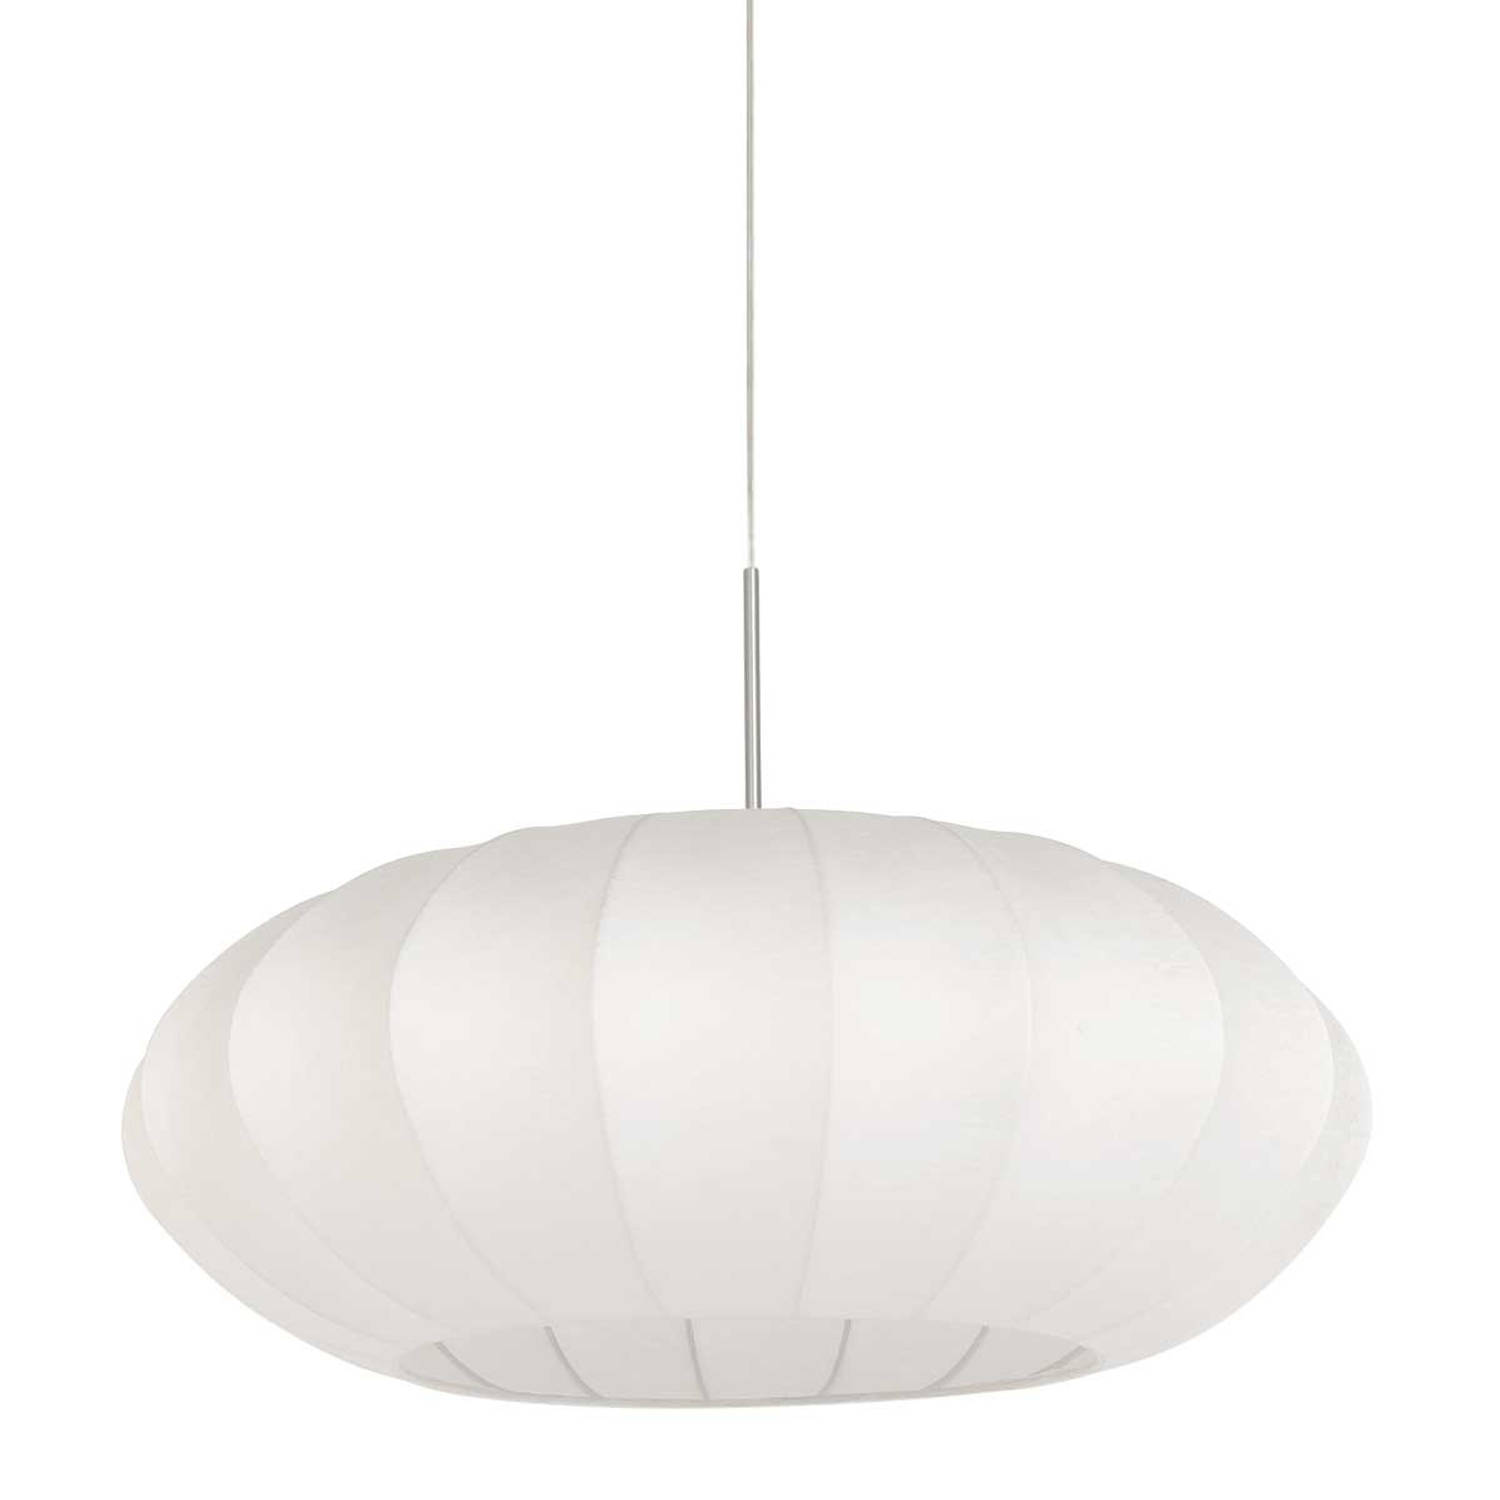 Steinhauer Sparkled light hanglamp - ø 60 cm - In hoogte verstelbaar - E27 (grote fitting) - staal en wit